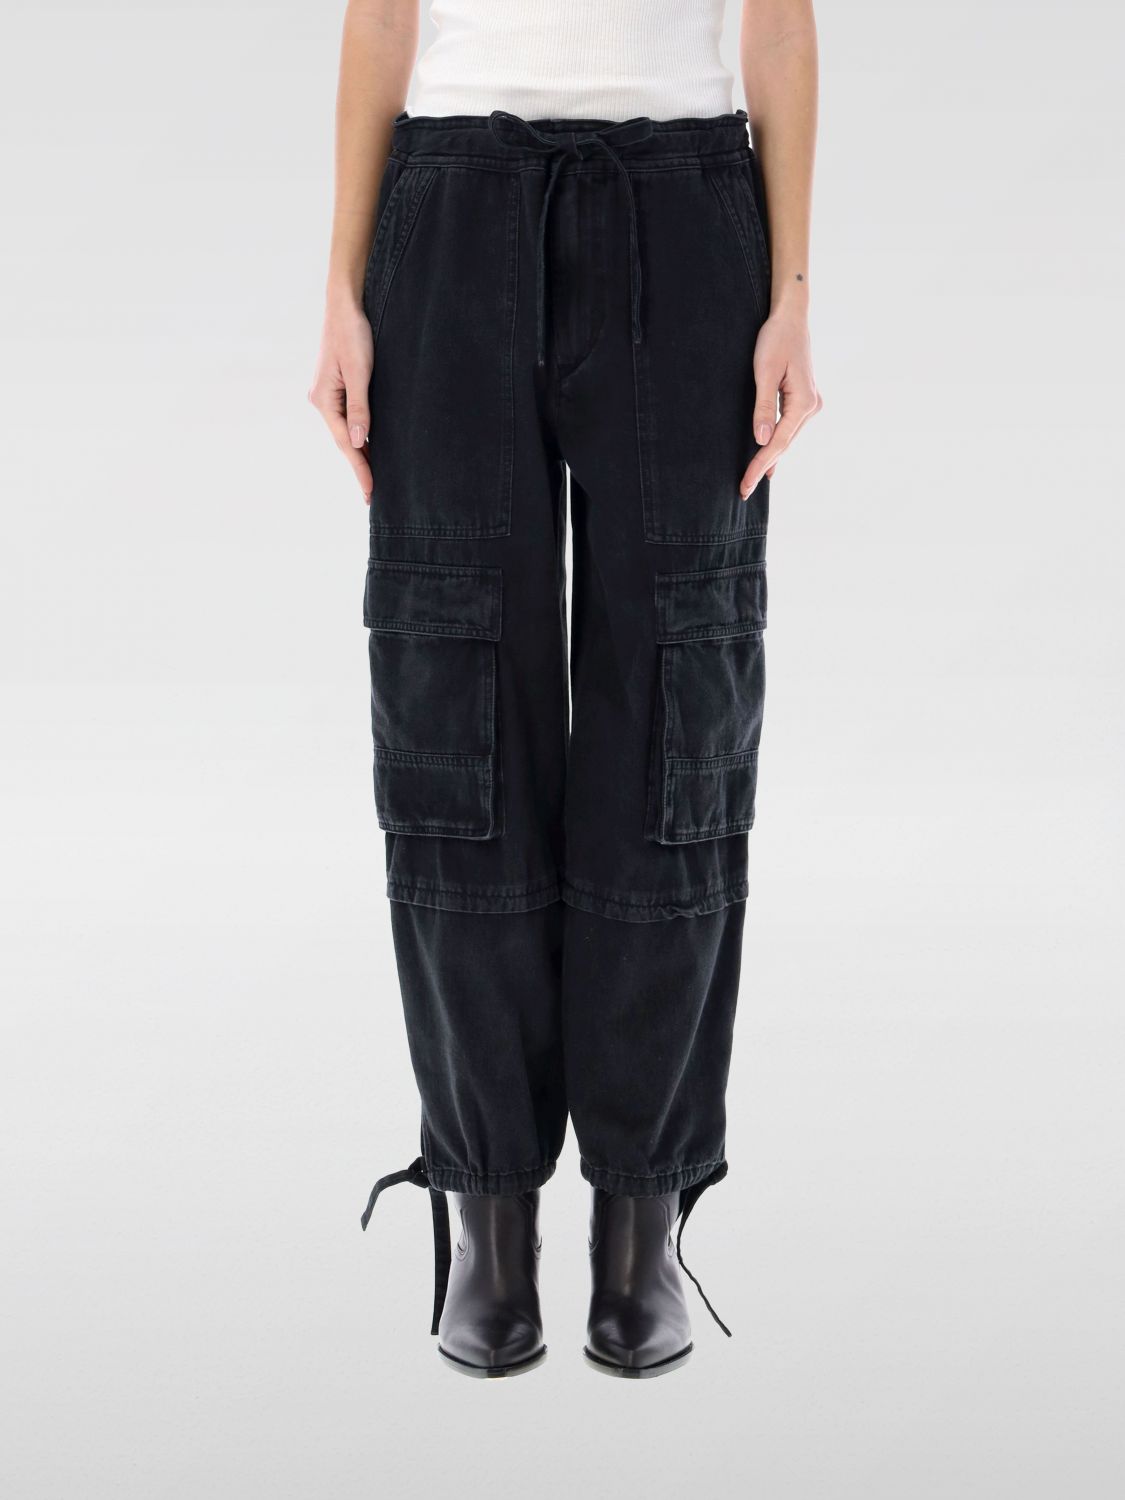 Isabel Marant Jeans ISABEL MARANT Woman color Black